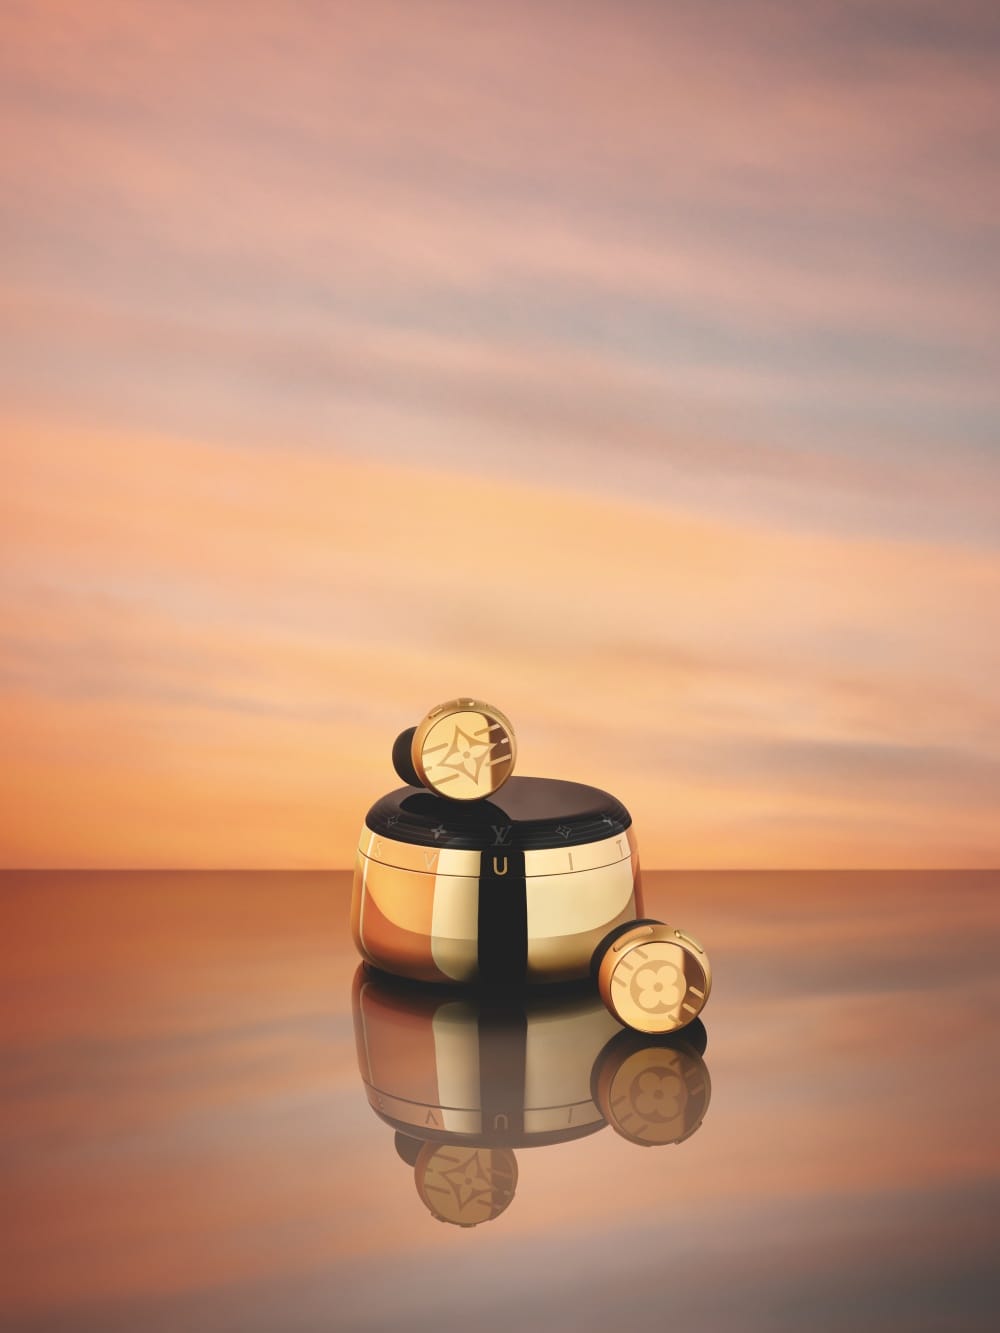 Louis Vuitton Unveils The New Tambour Horizon Light Up Connected Watch -  Harper's BAZAAR Malaysia